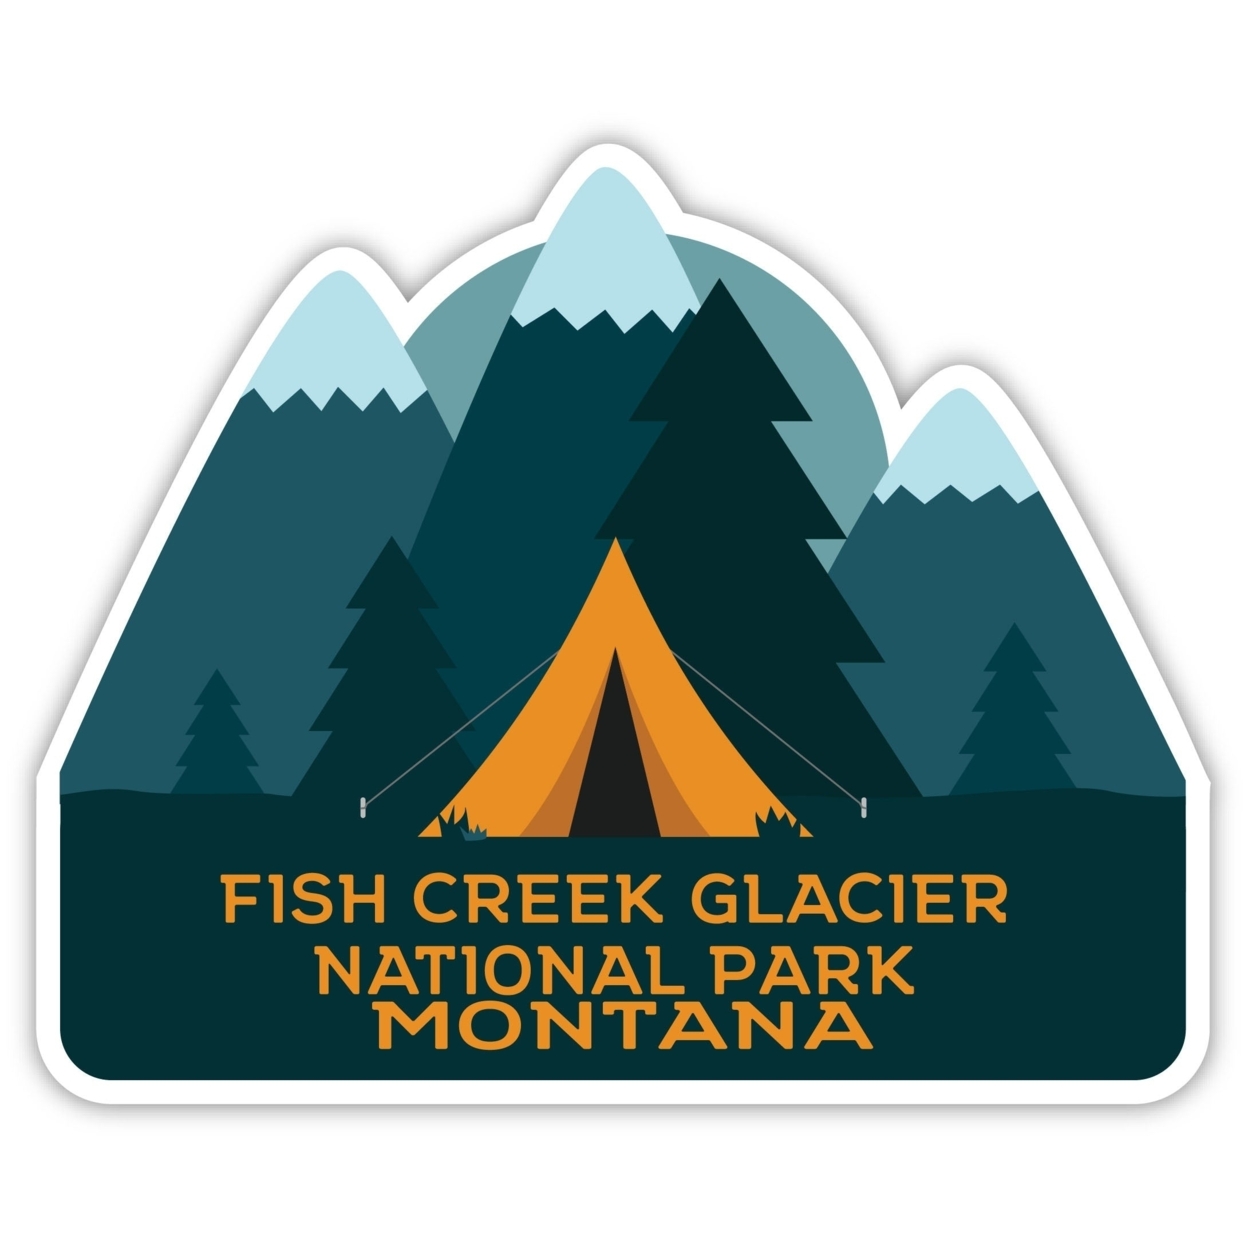 Fish Creek Glacier National Park Montana Souvenir Decorative Stickers (Choose Theme And Size) - 4-Pack, 4-Inch, Tent